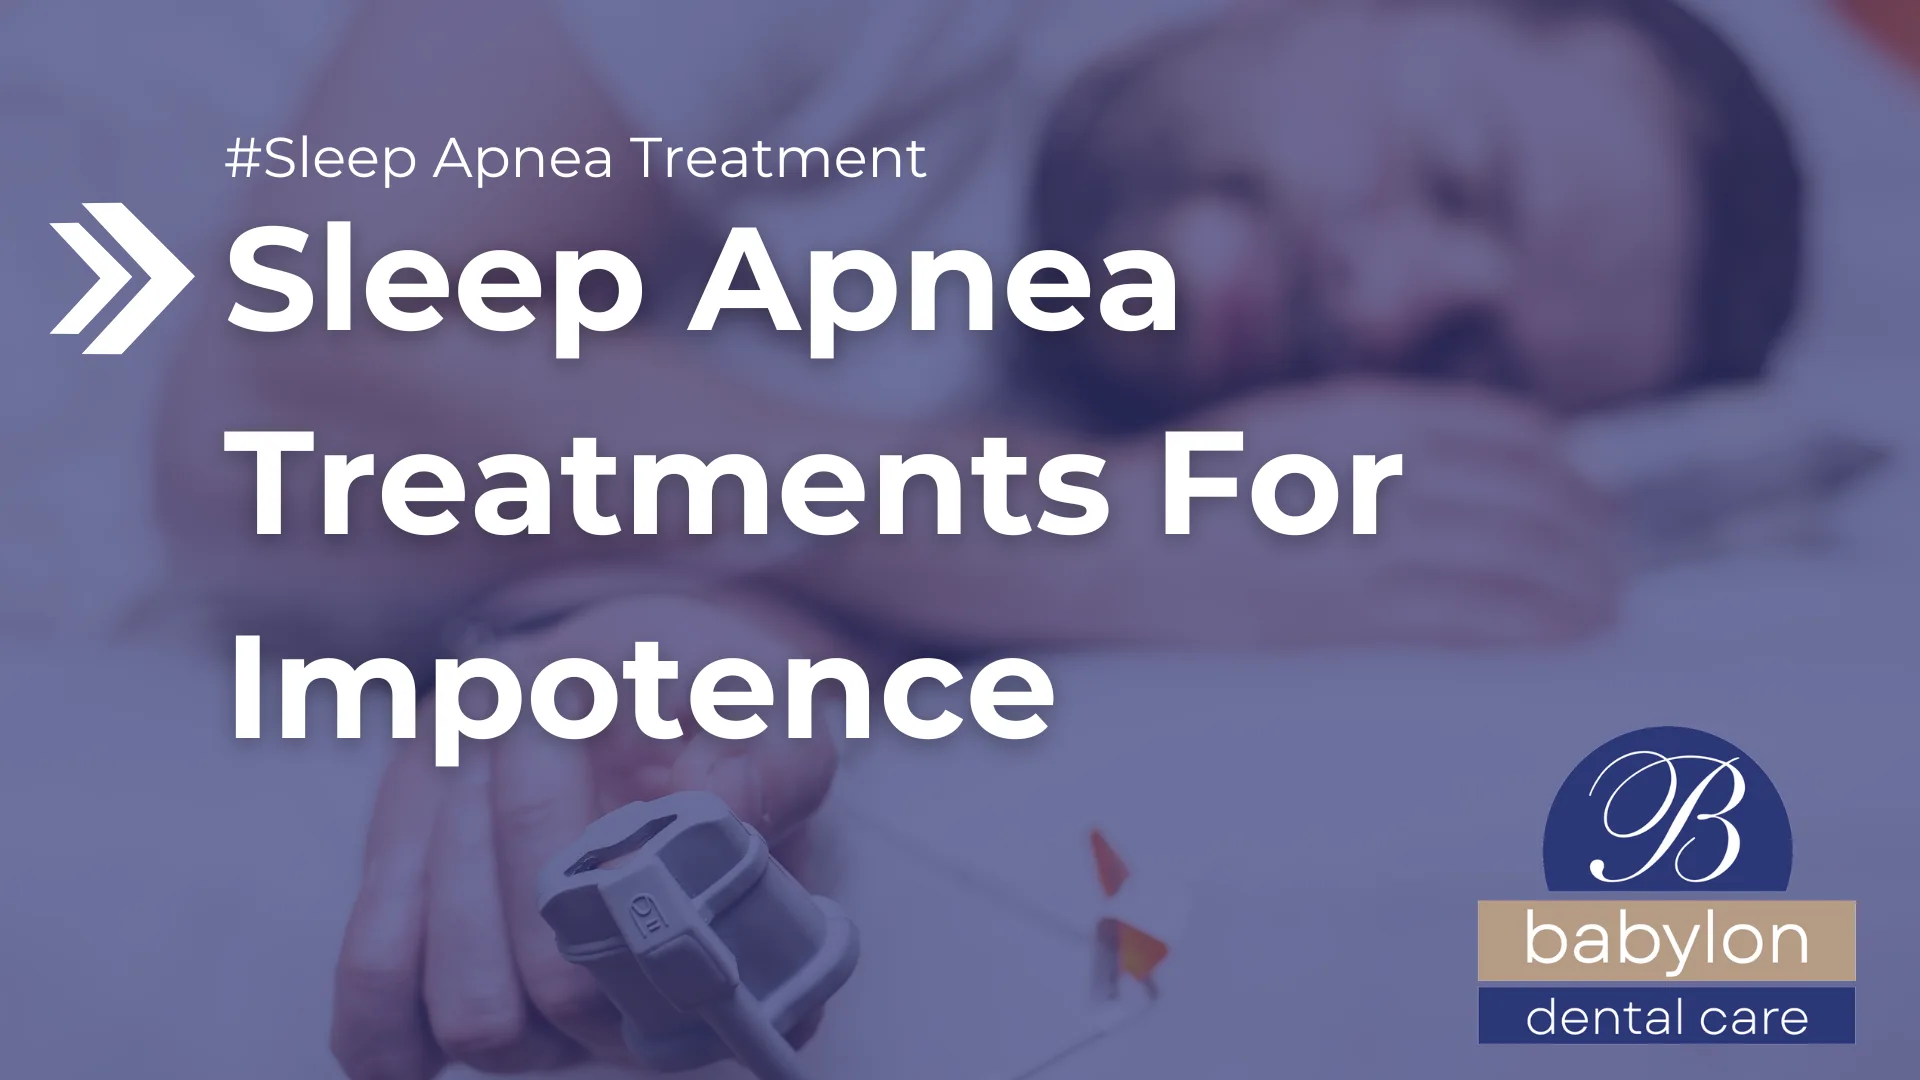 Sleep Apnea Treatments For Impotence Image - new logo